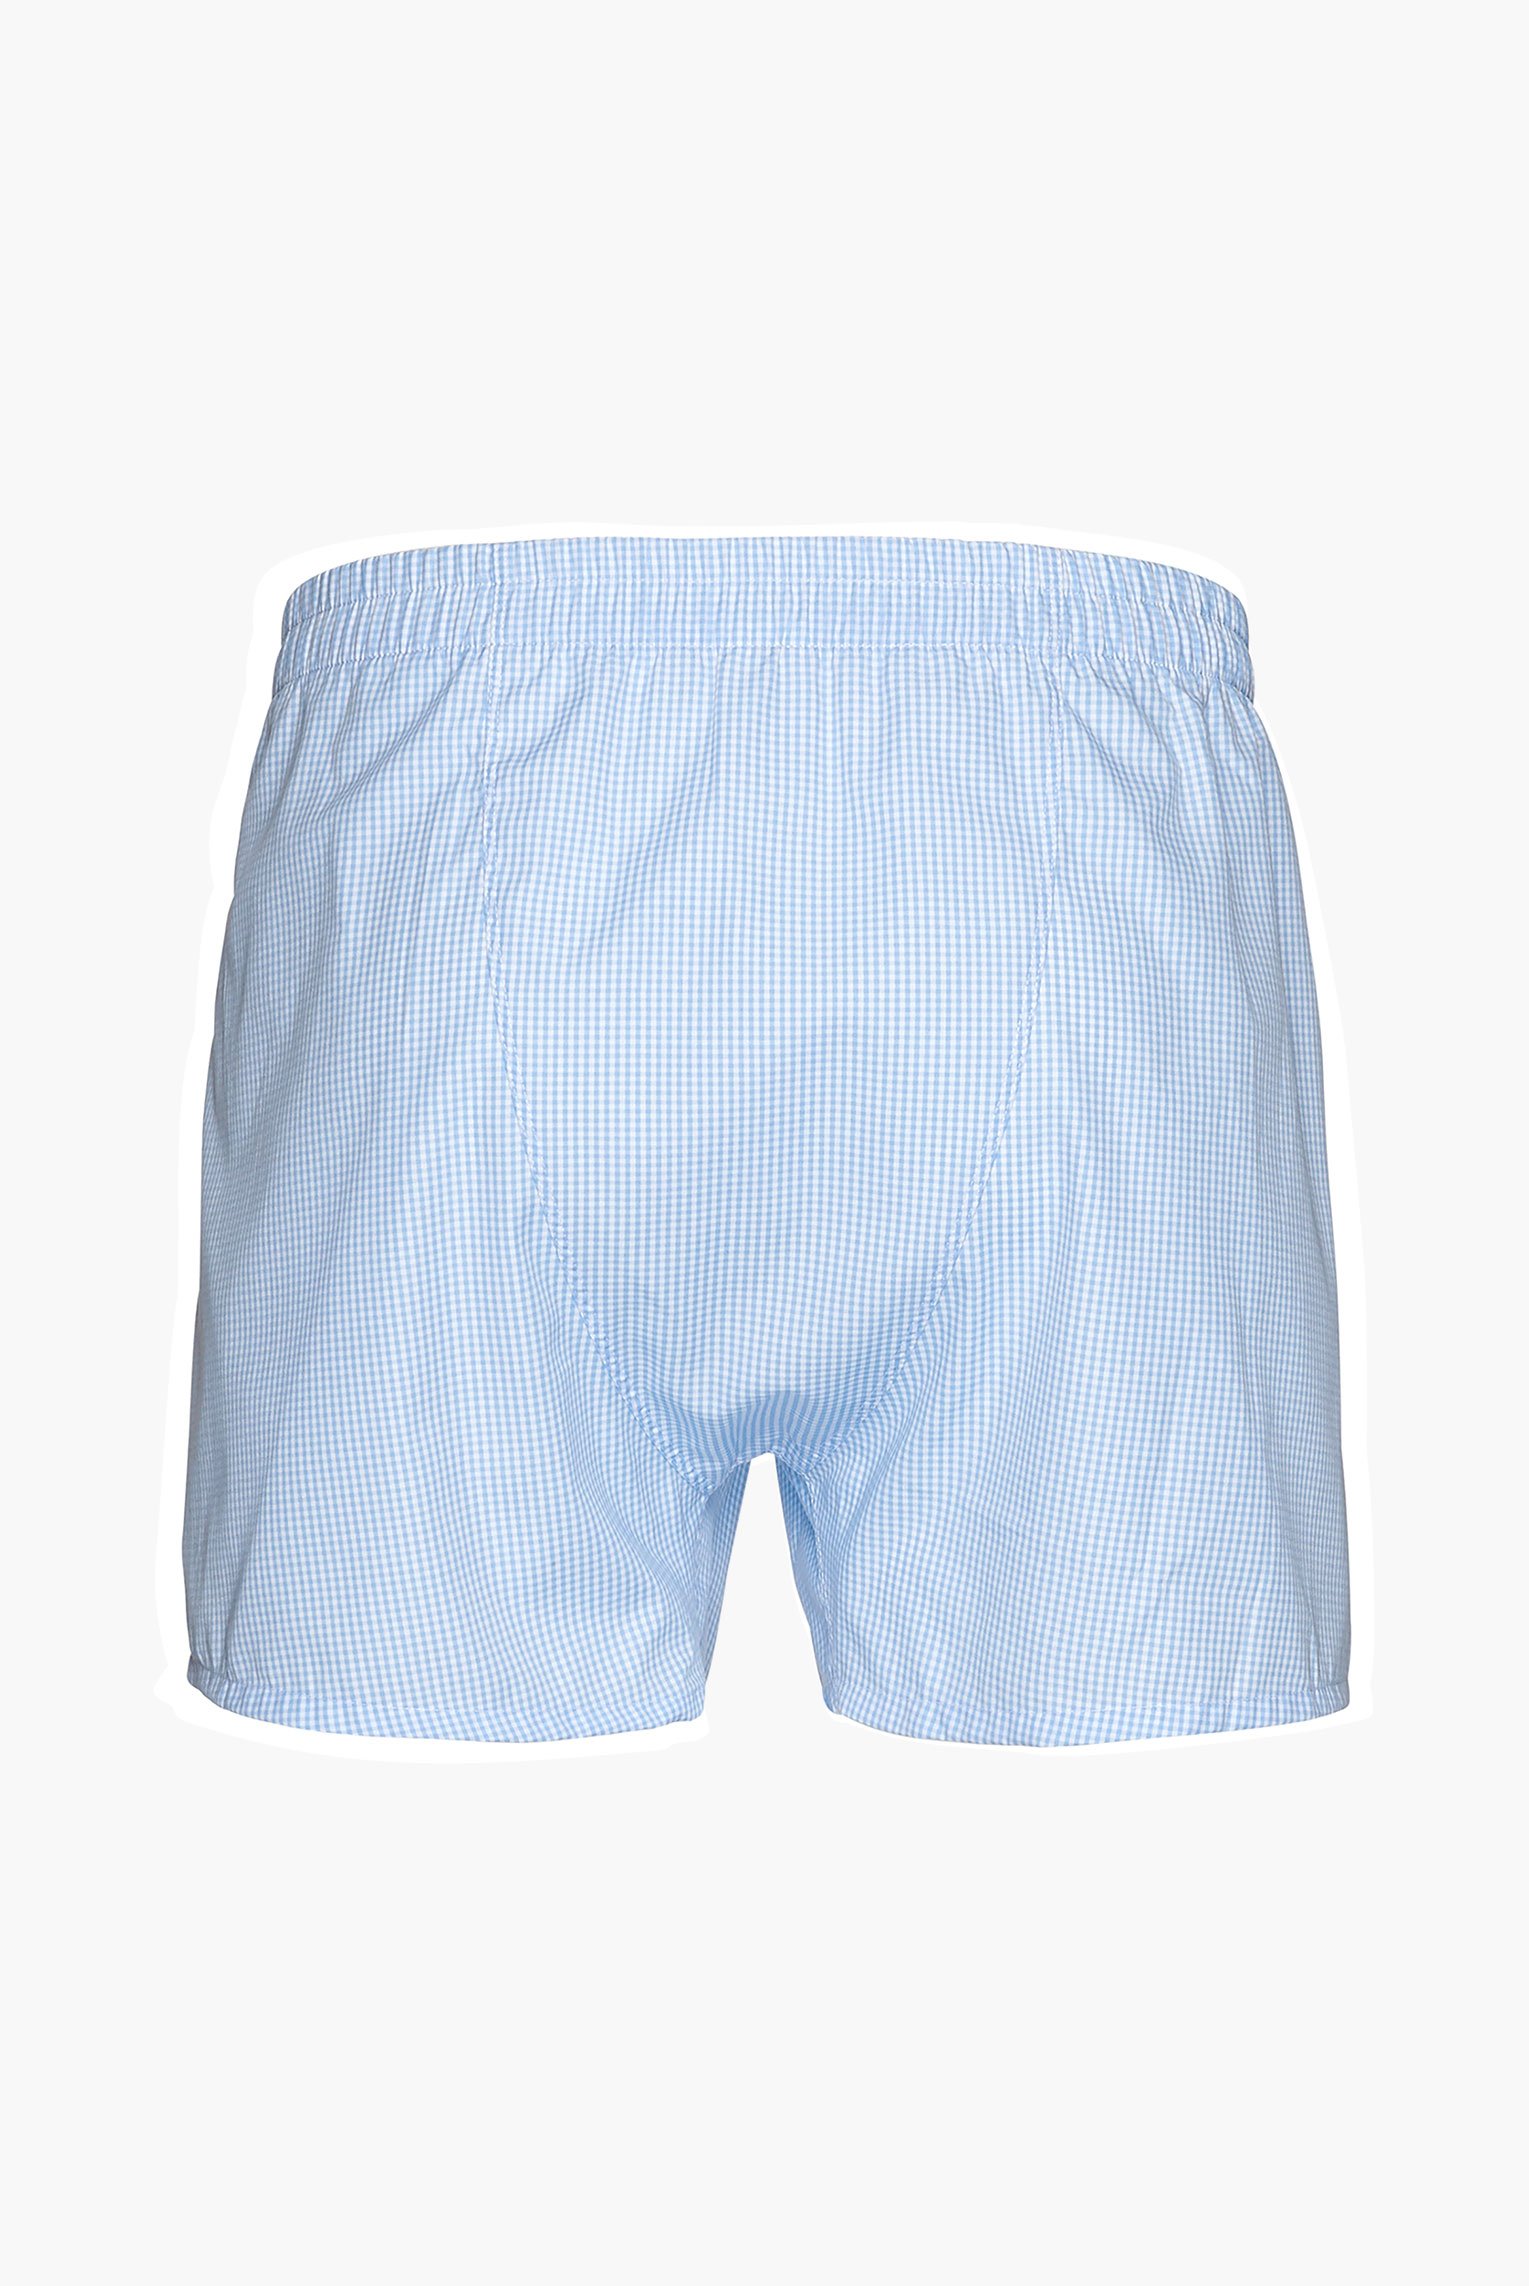 Underwear+Small Gingham Checked Poplin Boxer Shorts+91.1100.V4.141787.720.48